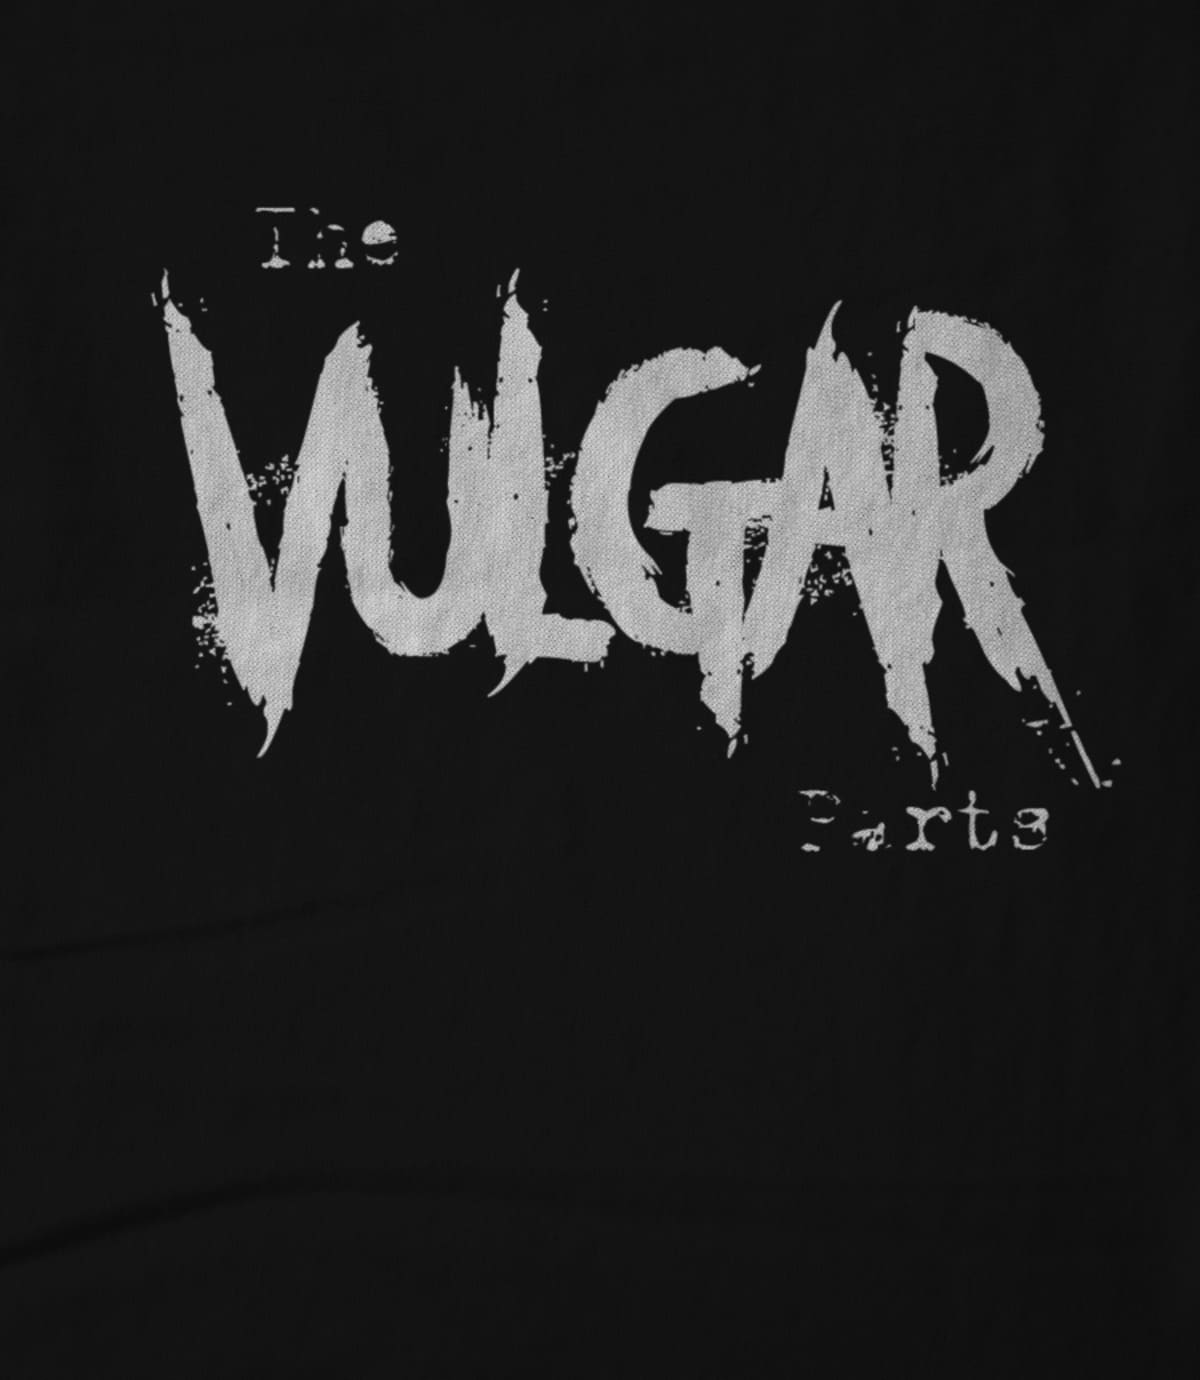 The Vulgar Parts